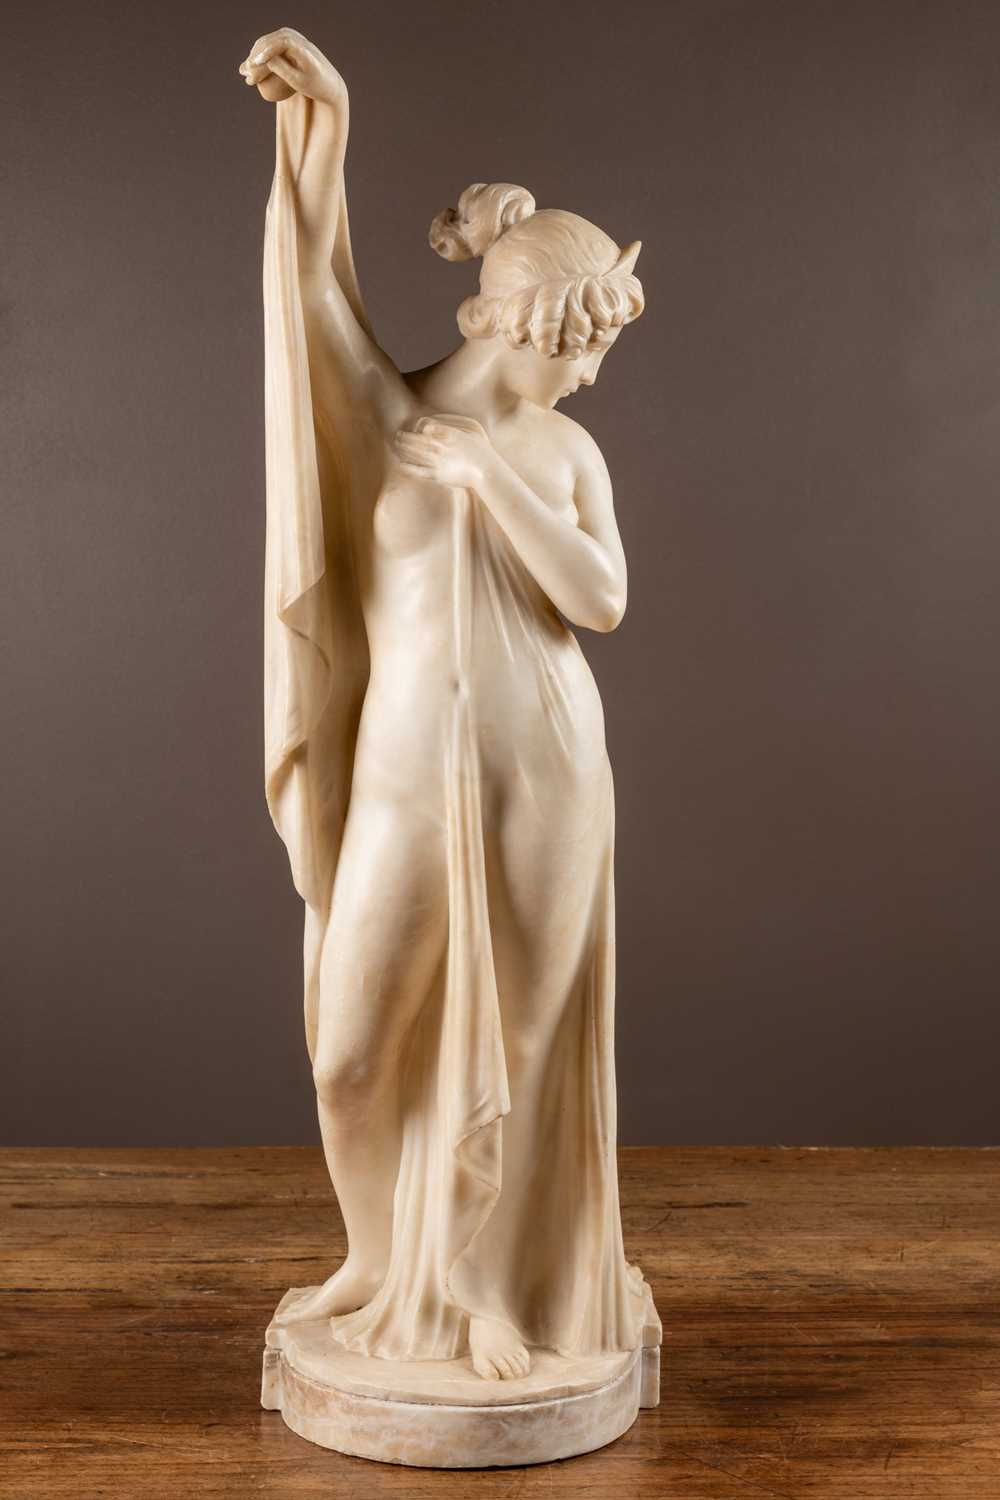 An alabaster sculpture of a draped nude